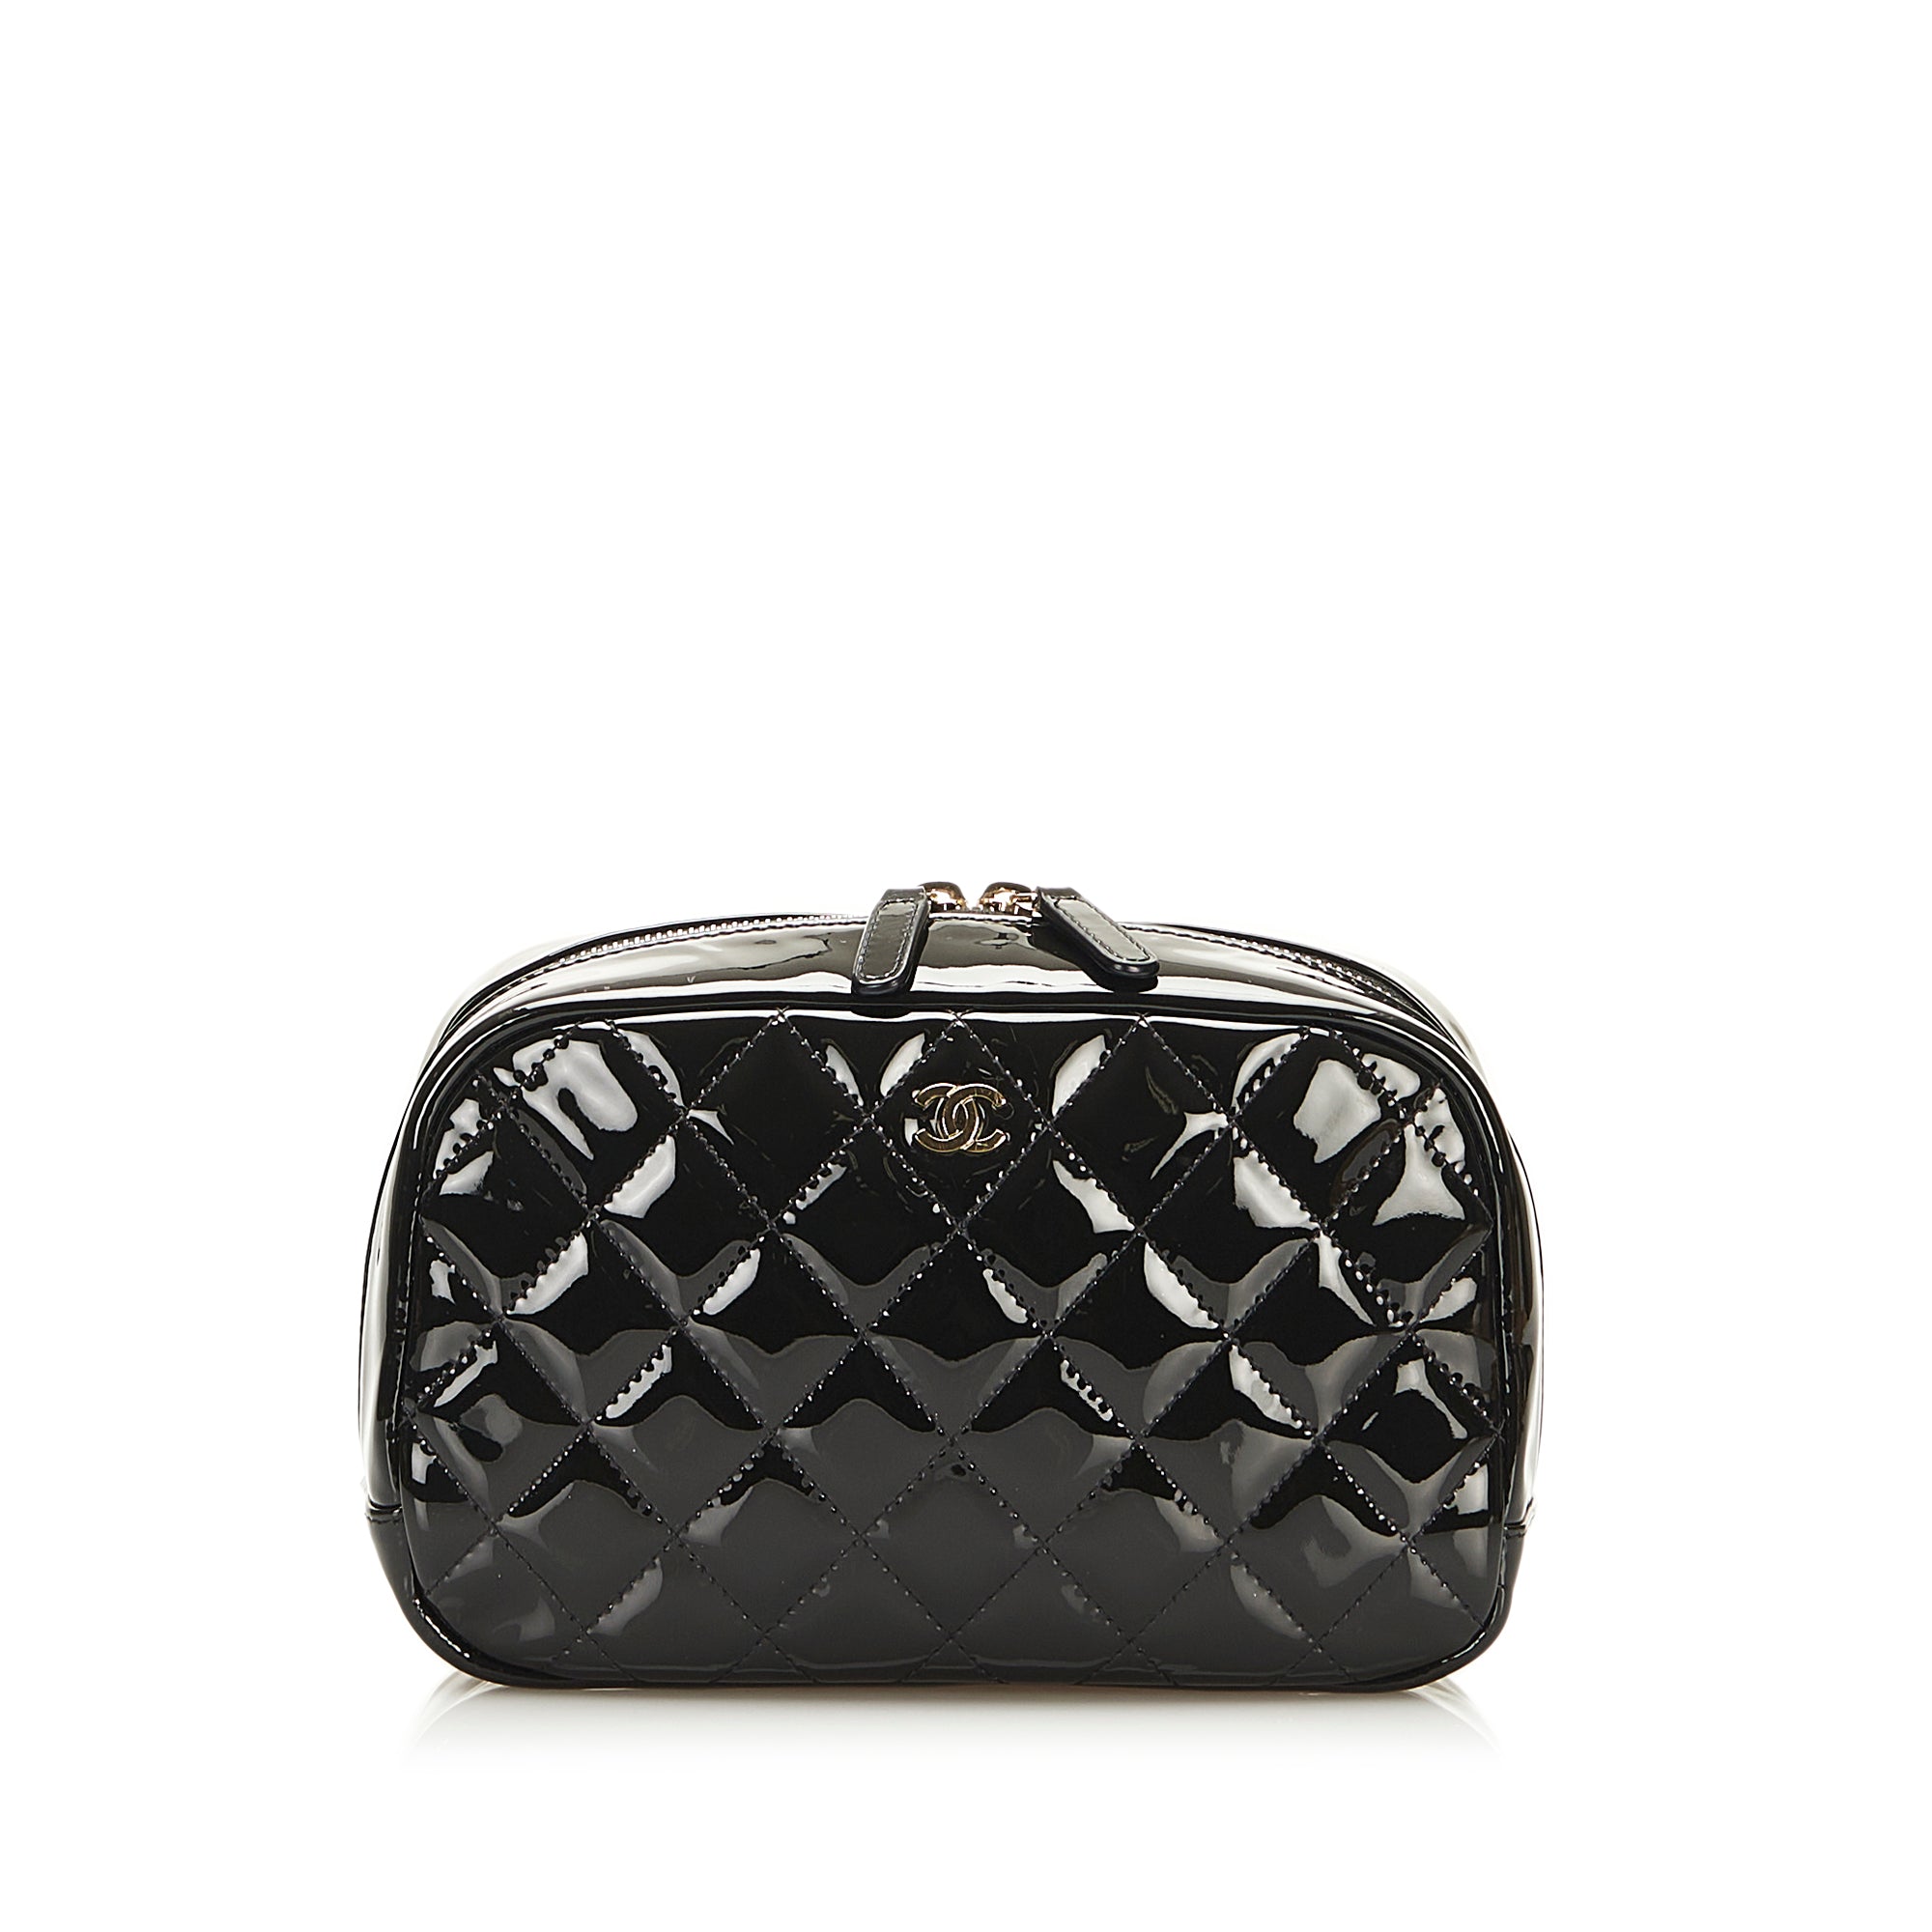 Chanel Bag Makeup Bags & Cases